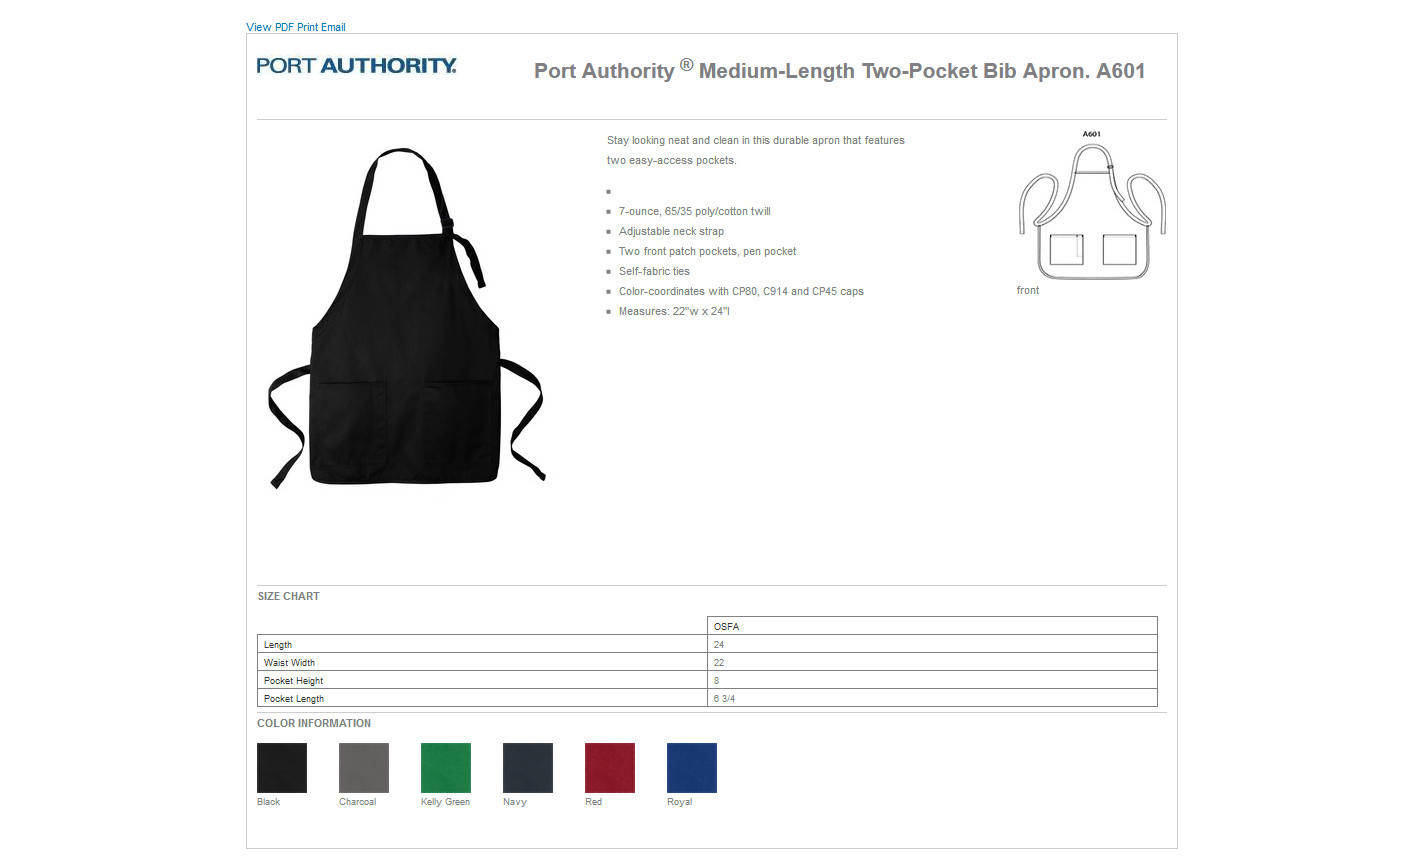 Port Authority A601 - Medium-Length Two-Pocket Bib Apron $8.57 - Accessories